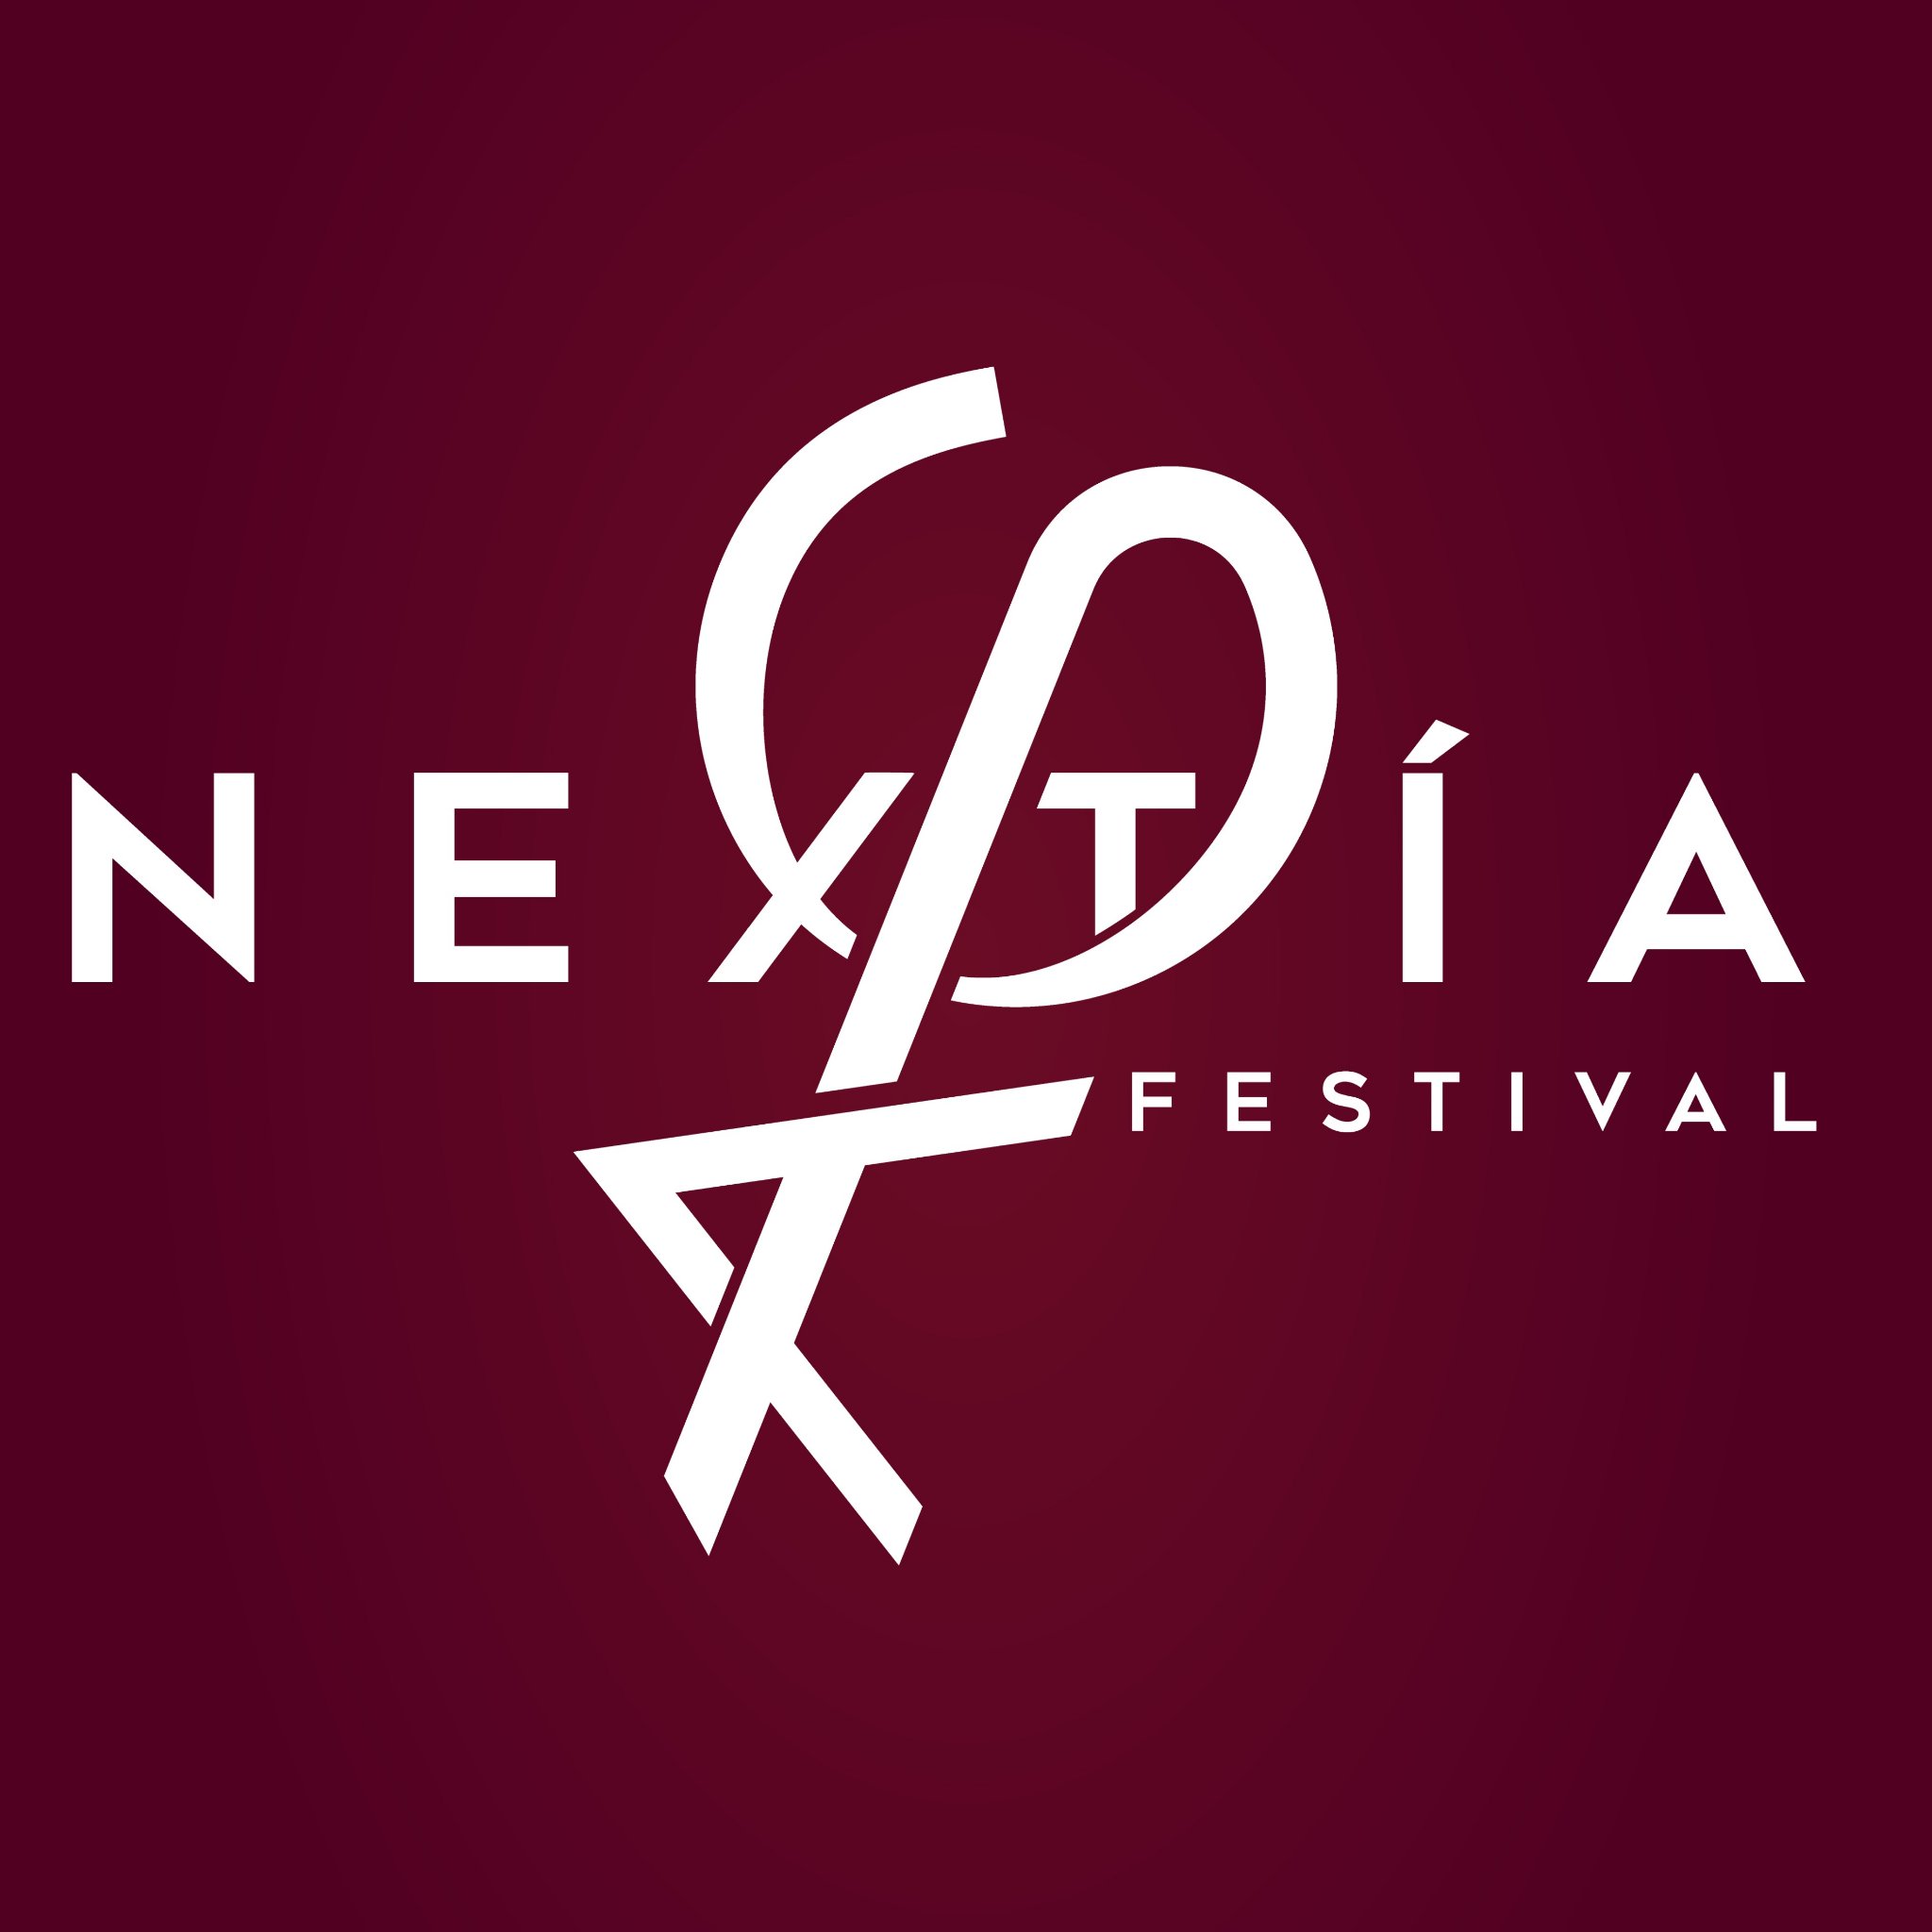 Nextía Festival